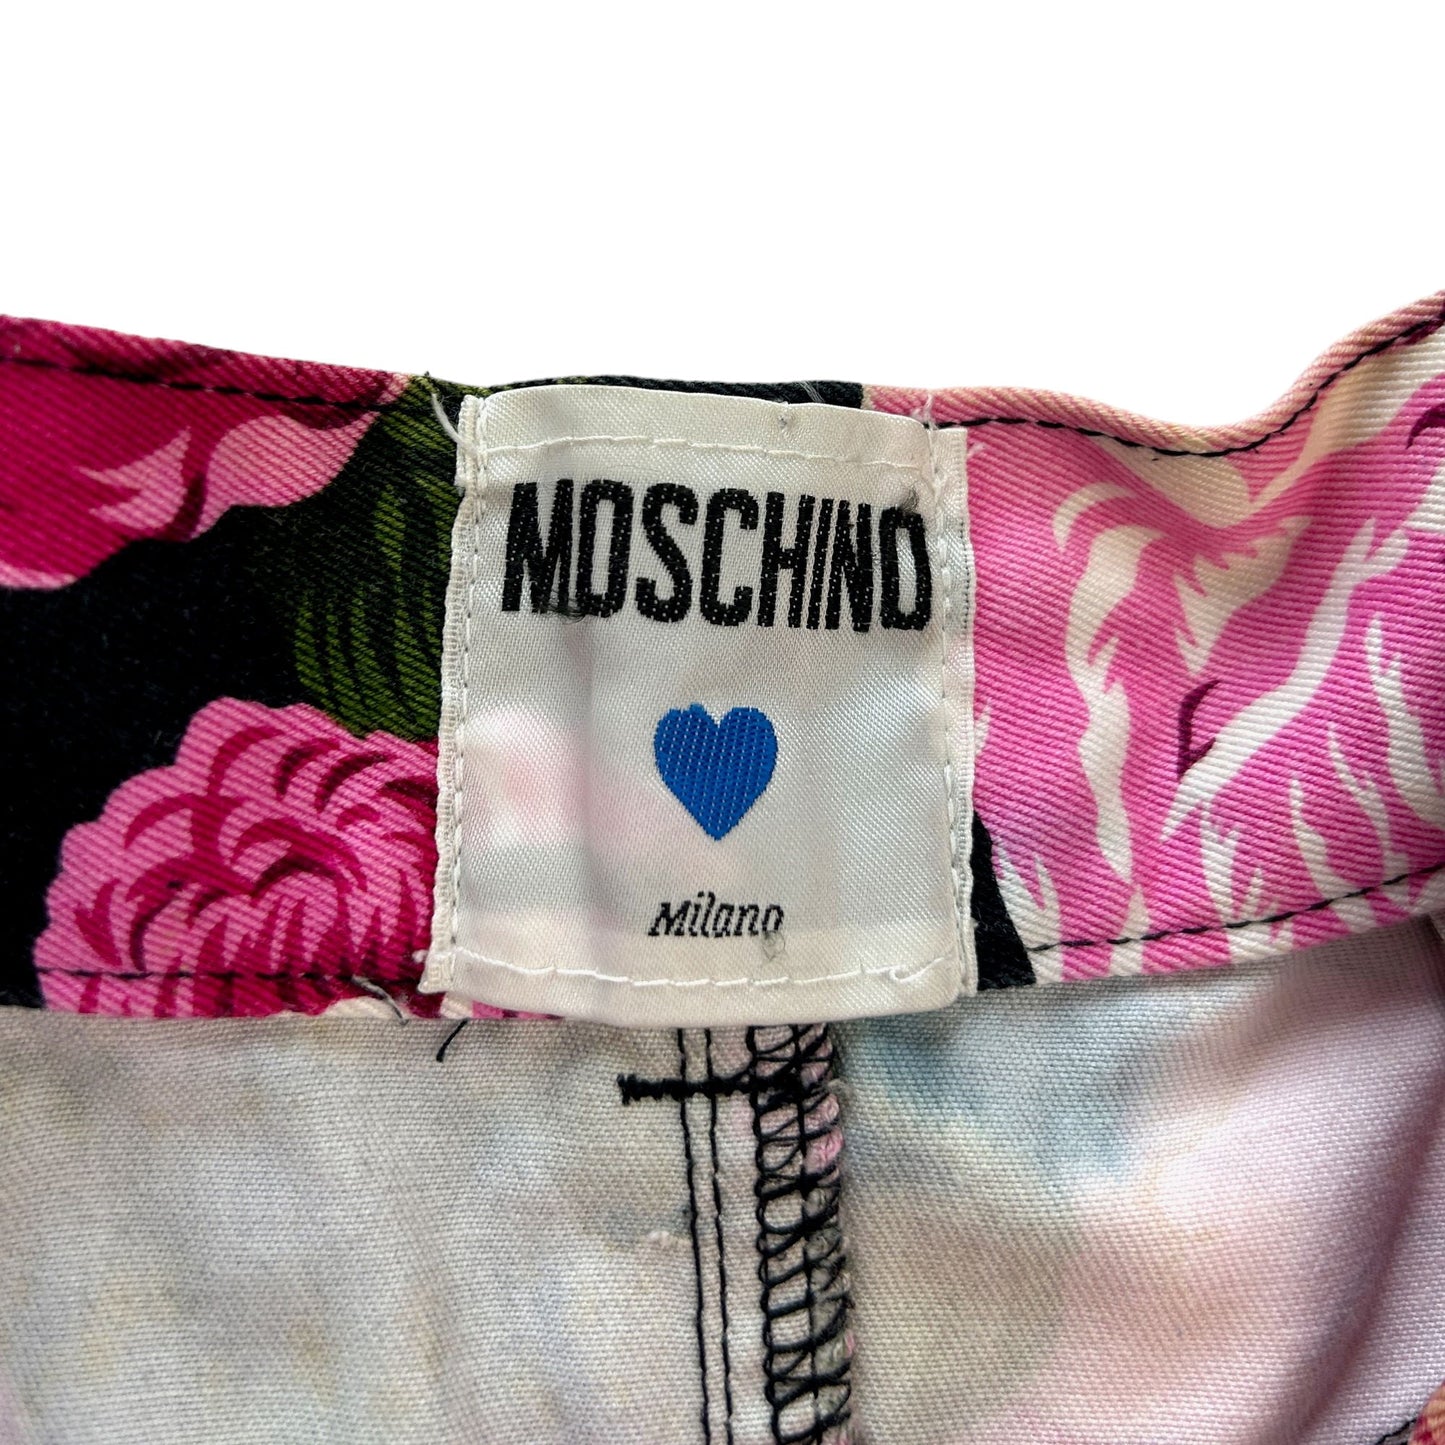 Vintage Moschino Flower Denim Jeans Size W24